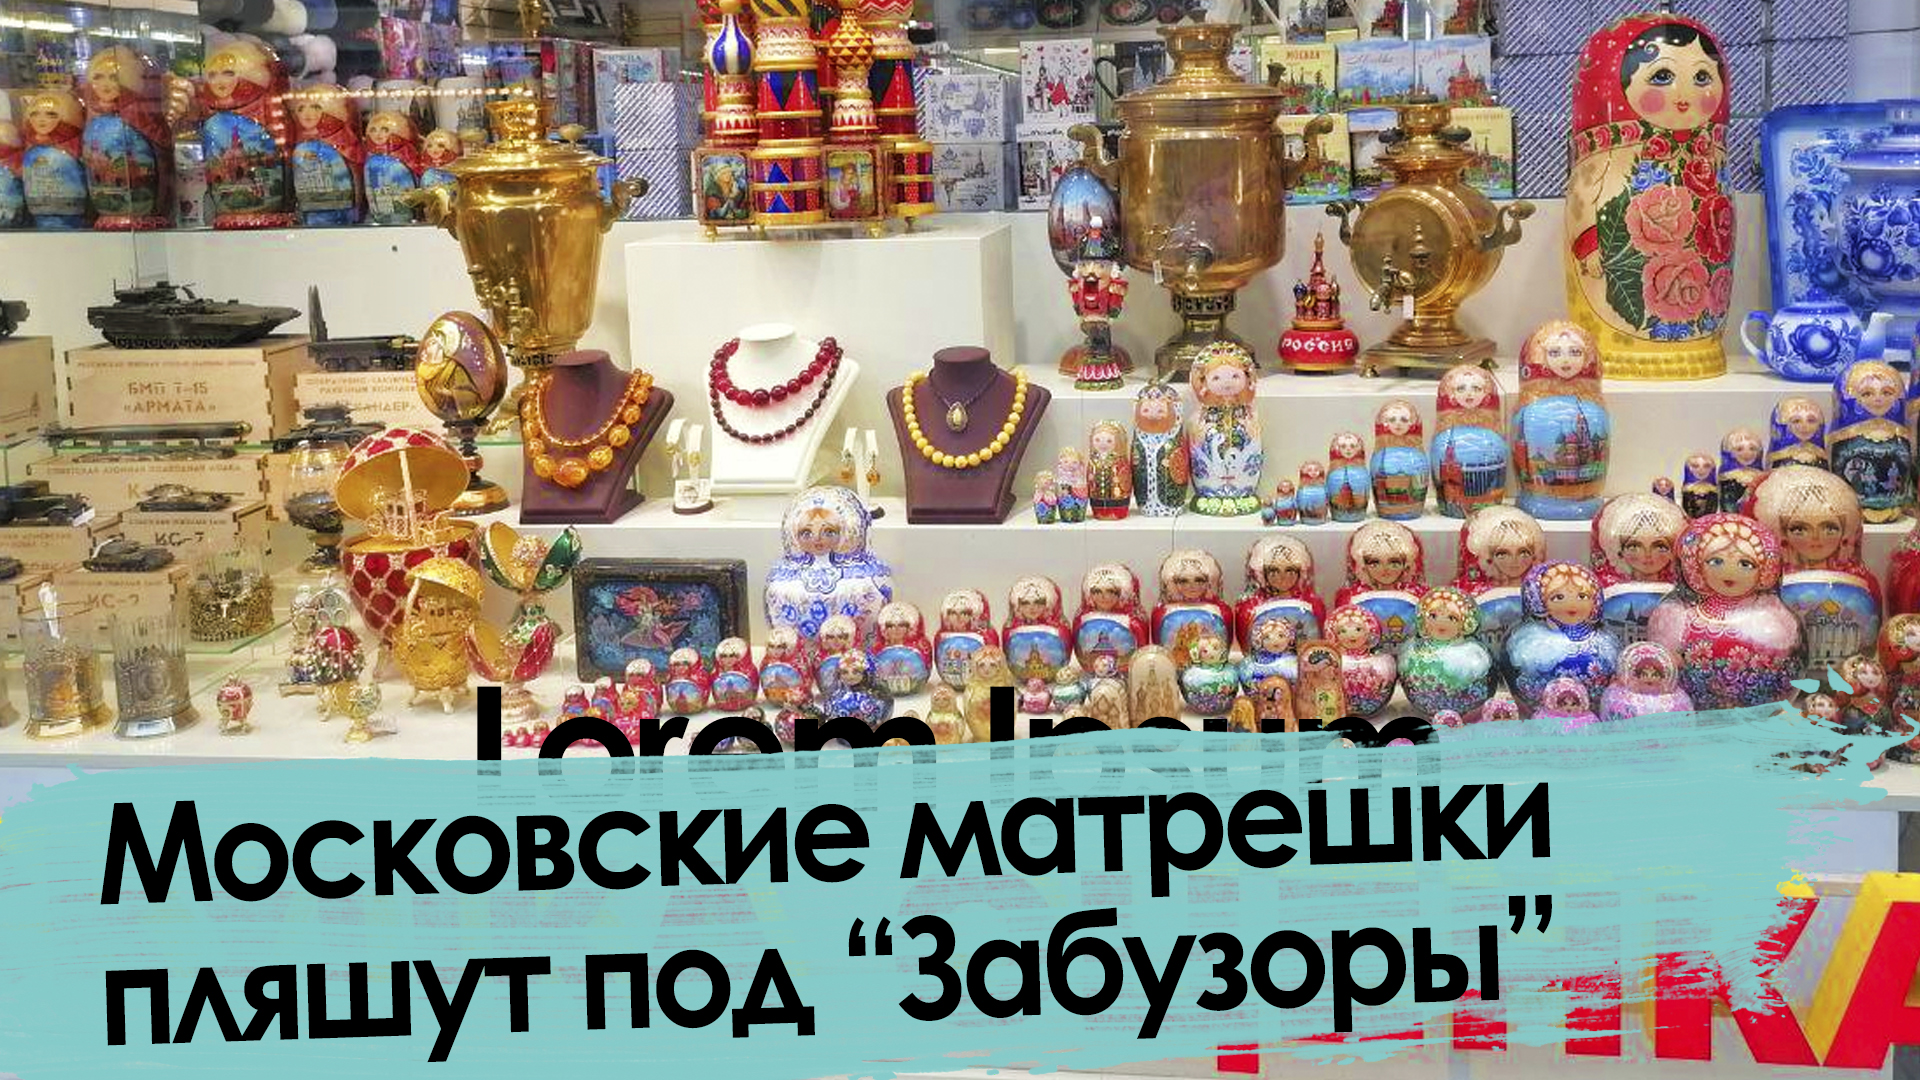 Московские матрешки пляшут под «Забузоры»